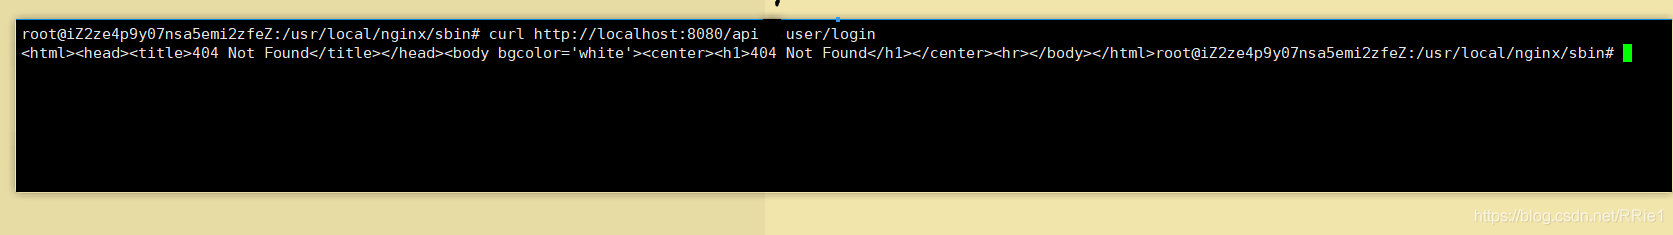 nginx访问动态接口报错404Not Found问题解决